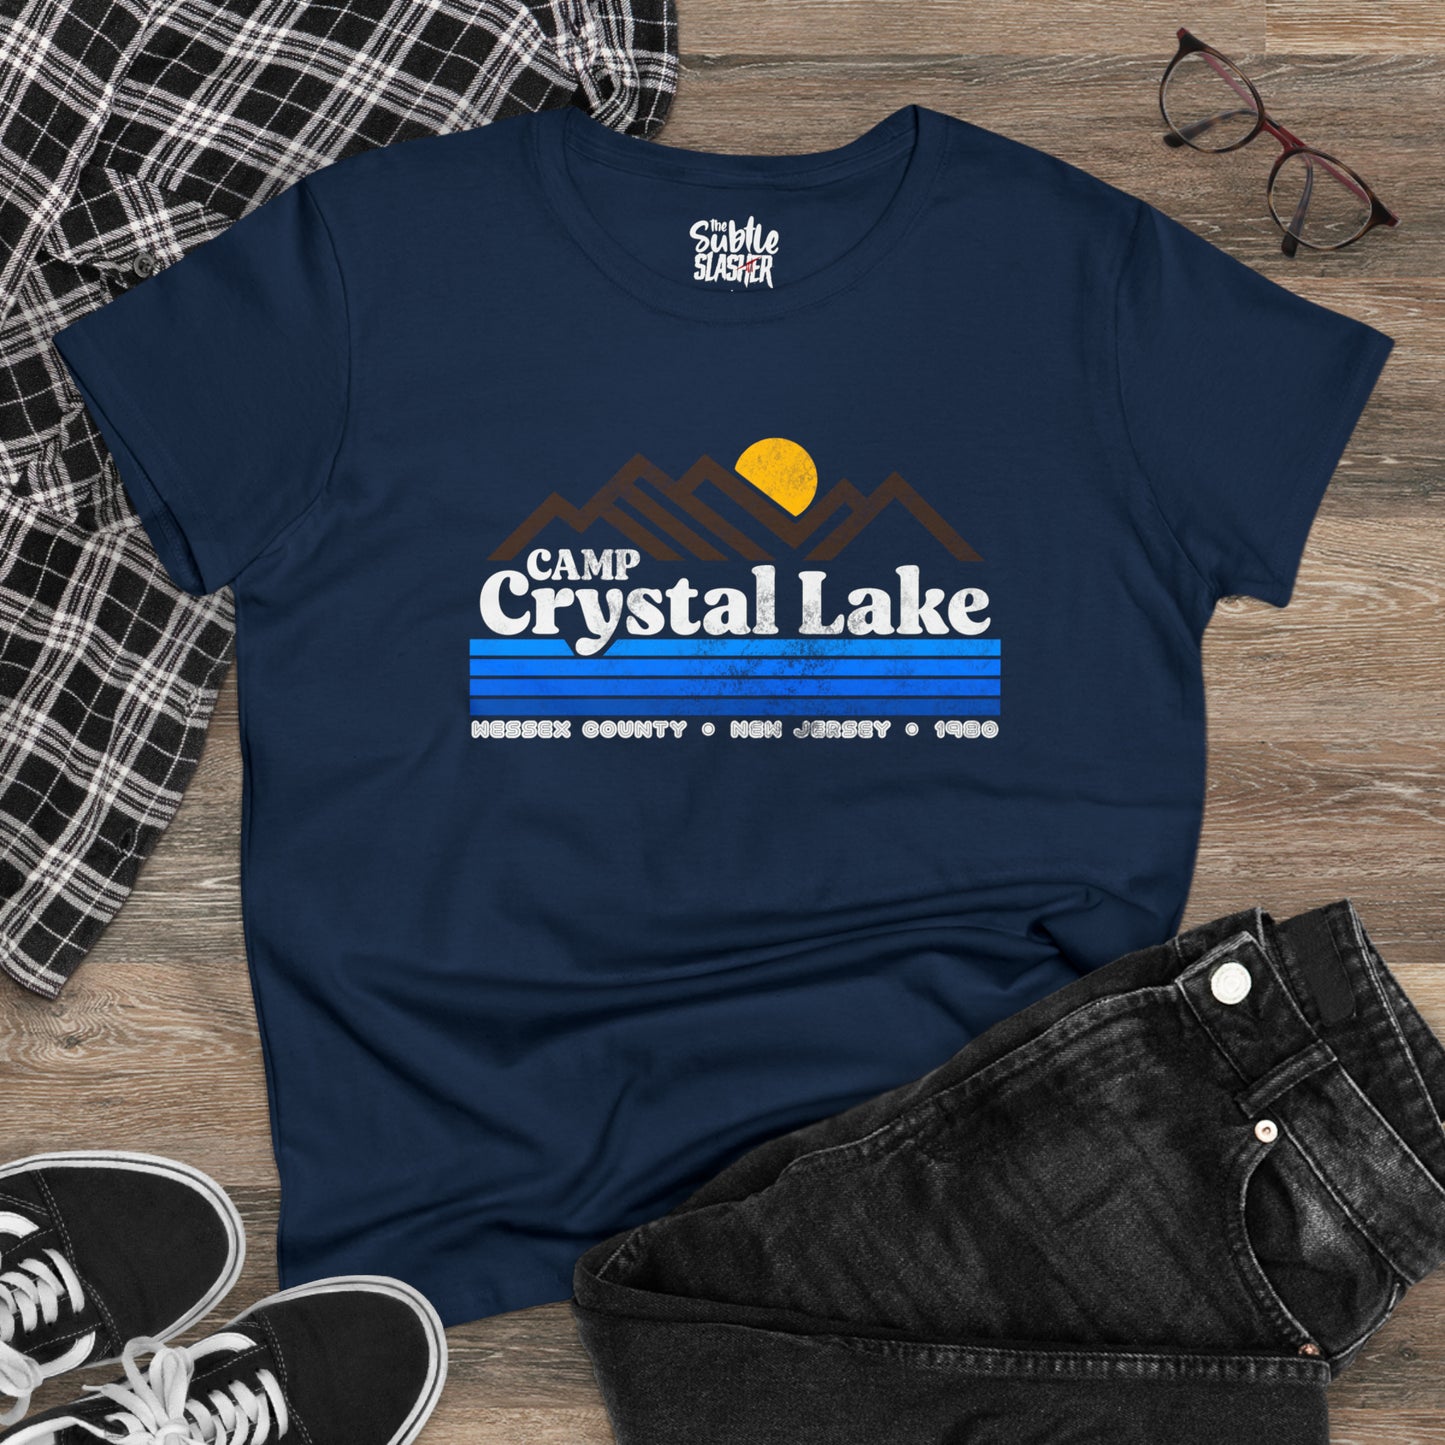 Camp Crystal Lake Women's Tee